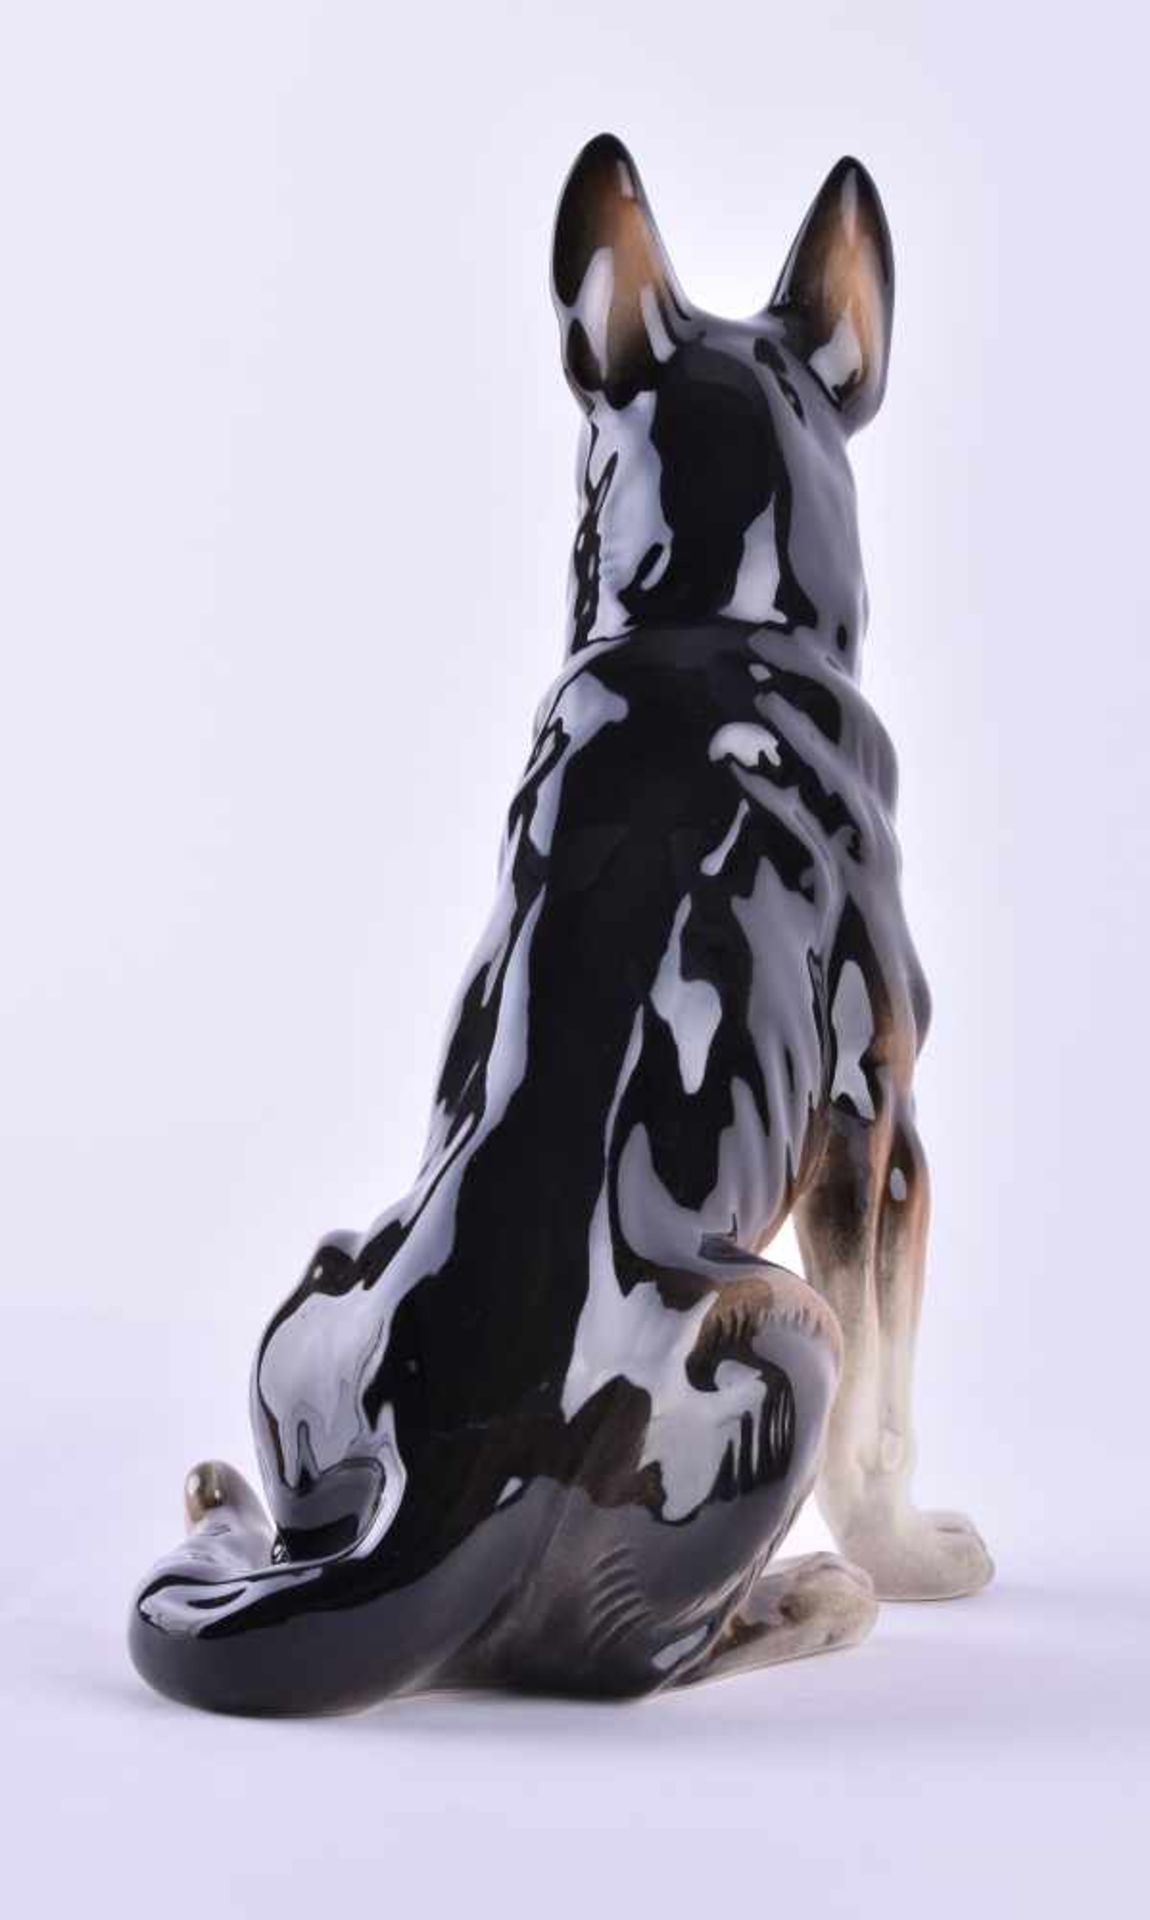 Schäferhund Goebelfarbig staffiert gemarkt, H: 27,5 cmGerman shepherd Goebelcolored painted - Bild 3 aus 4